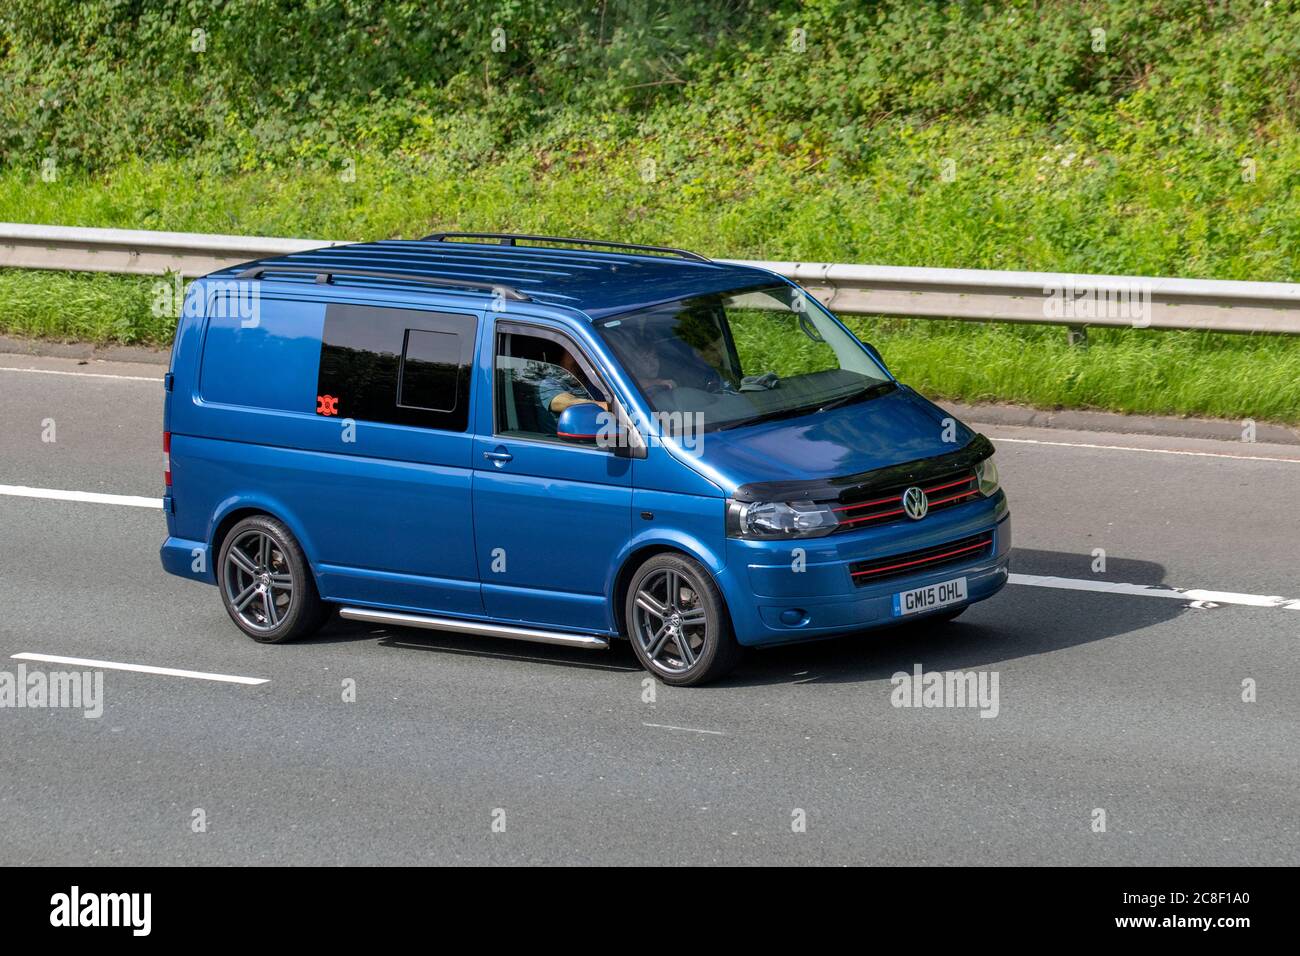 Volkswagen transporter vans hi-res stock photography and images - Alamy